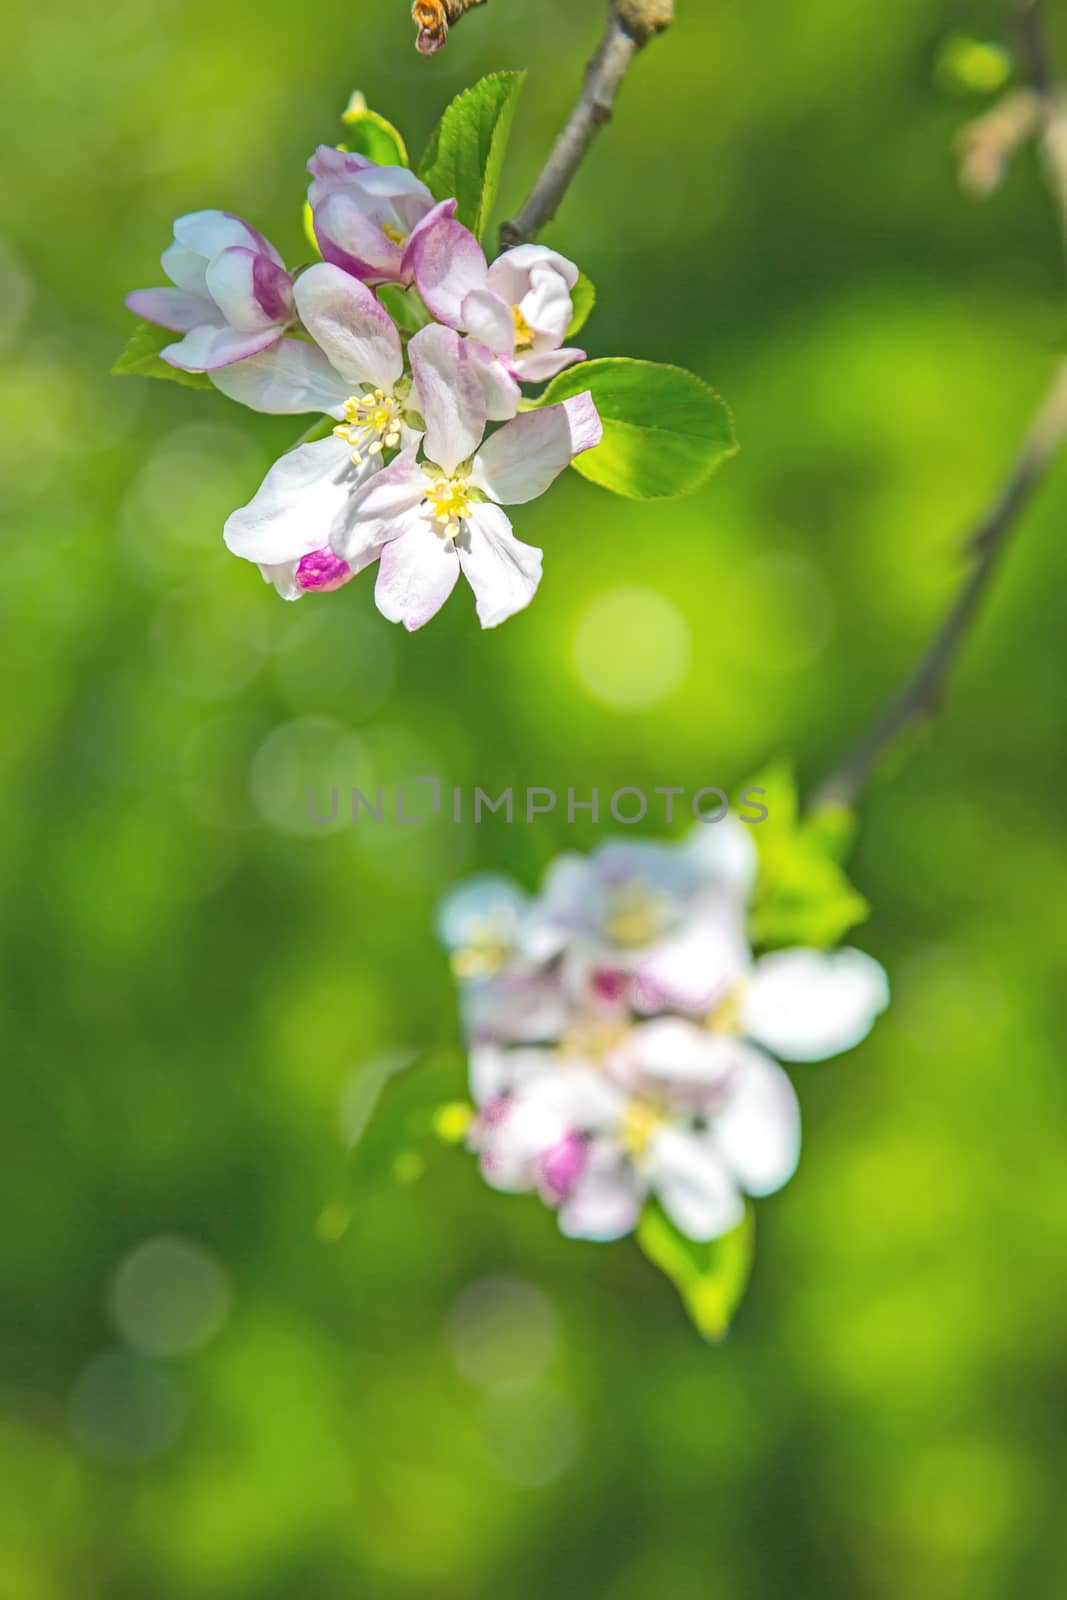 Fruit tree blossom close-up. Shallow depth of field by pixinoo